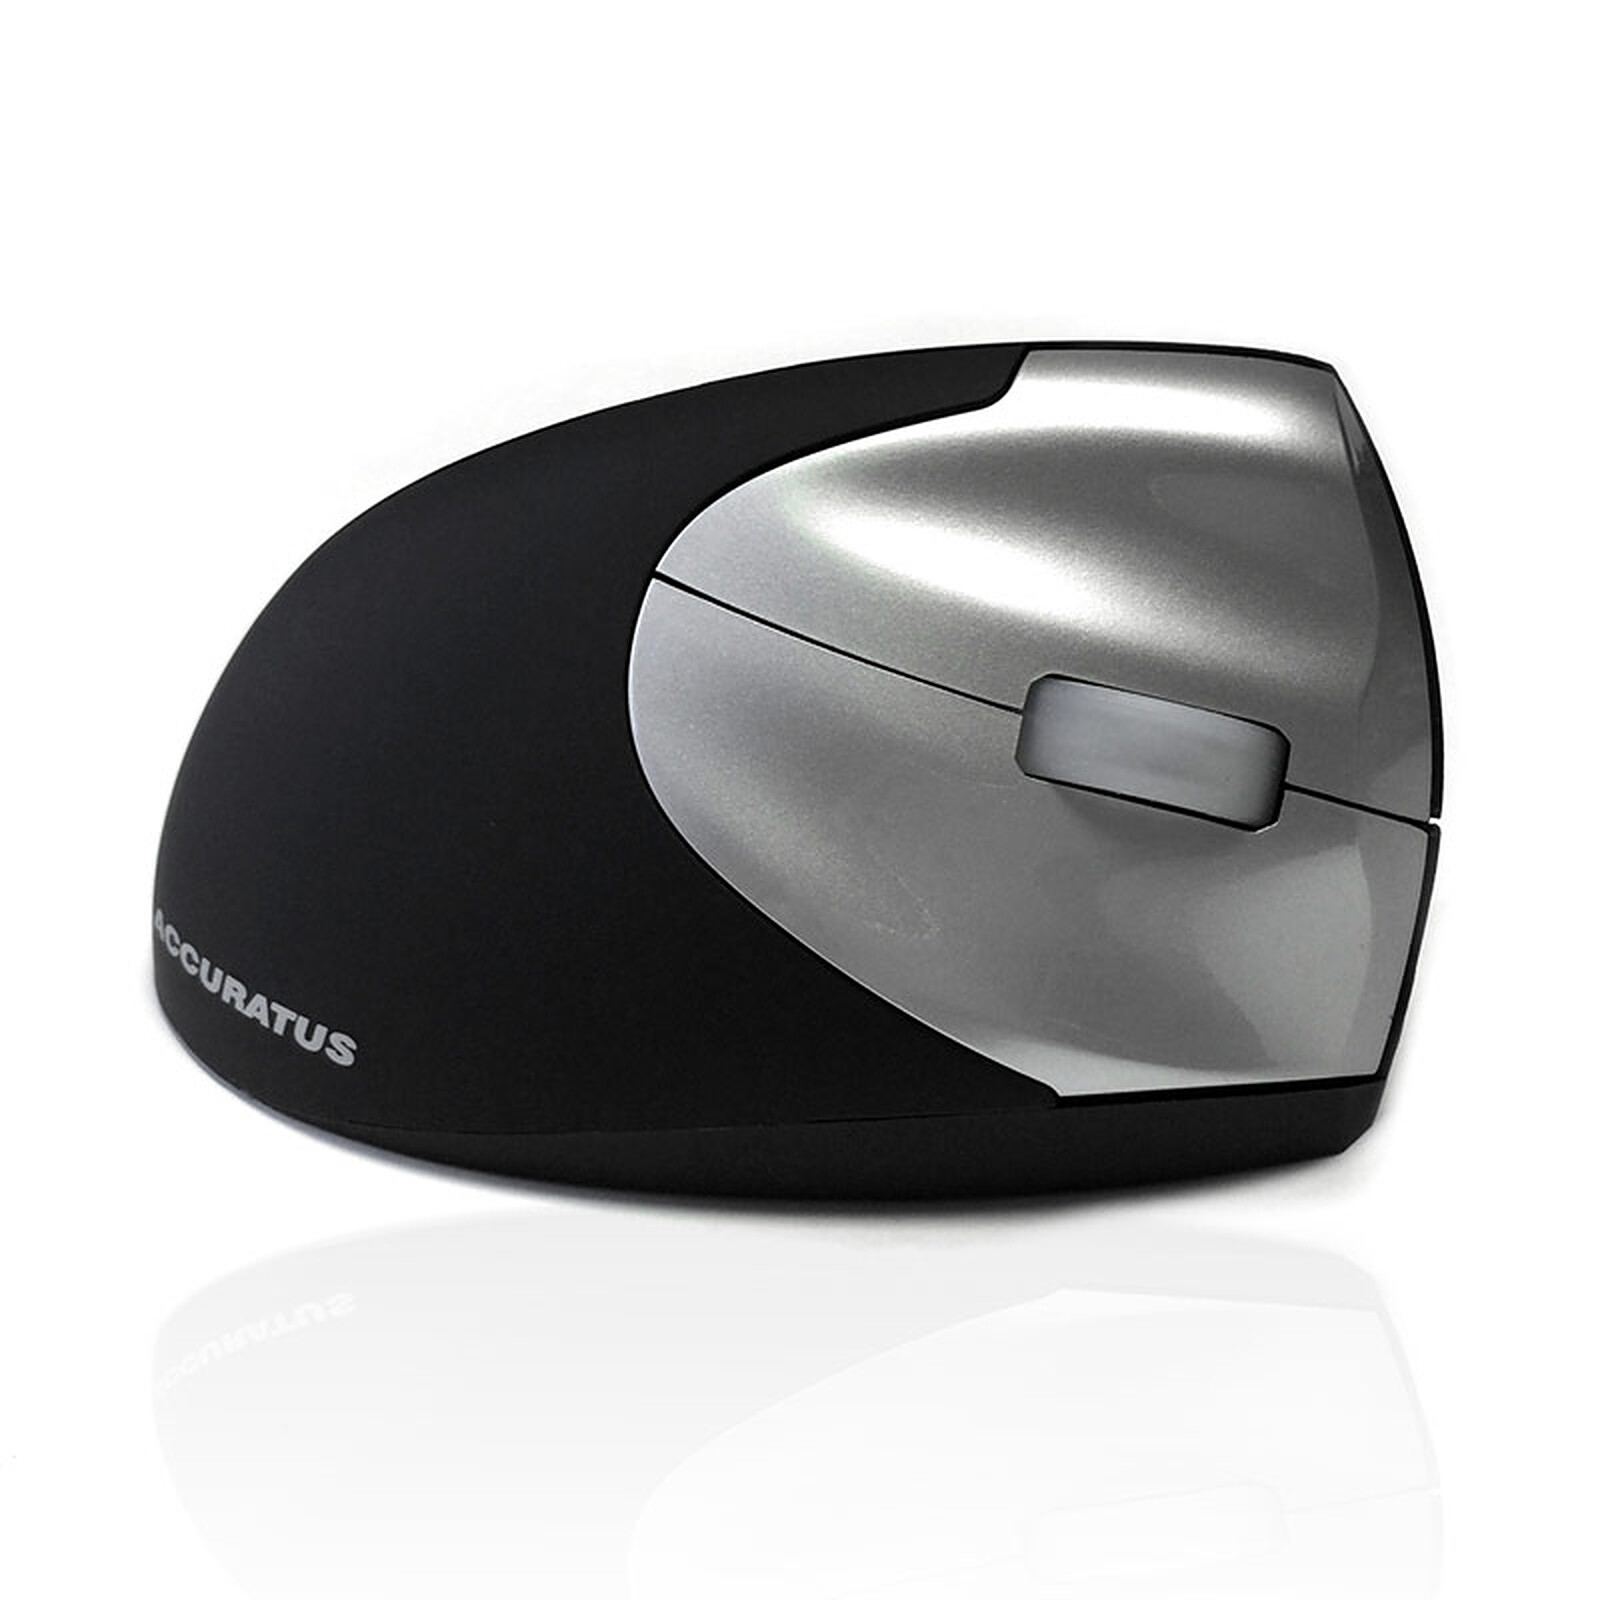 Mobility Lab Premium Wireless Ergonomic Mouse - Souris PC - Garantie 3 ans  LDLC